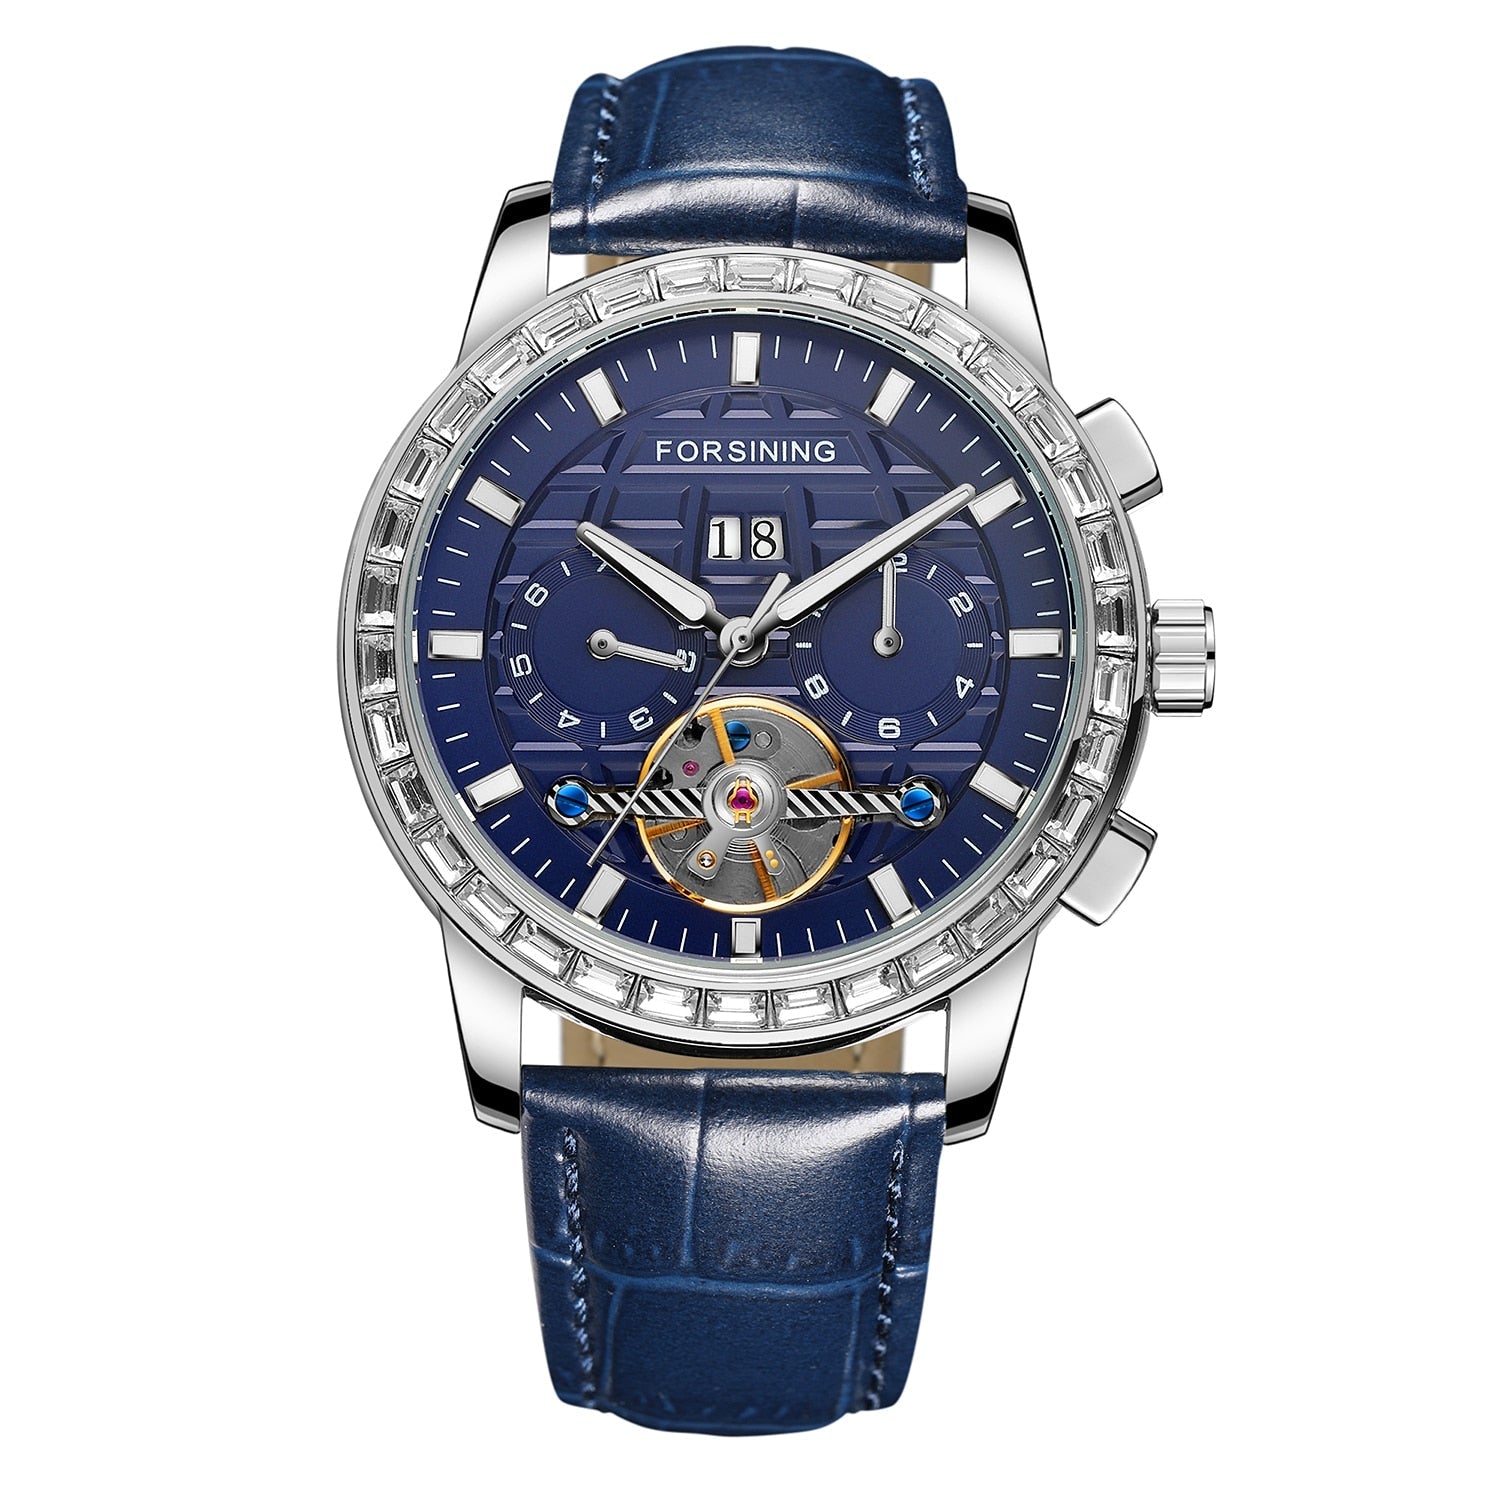 Top Brand Luxury Genuine Automatic Wristwatch HF6920 Bellissimo Deals